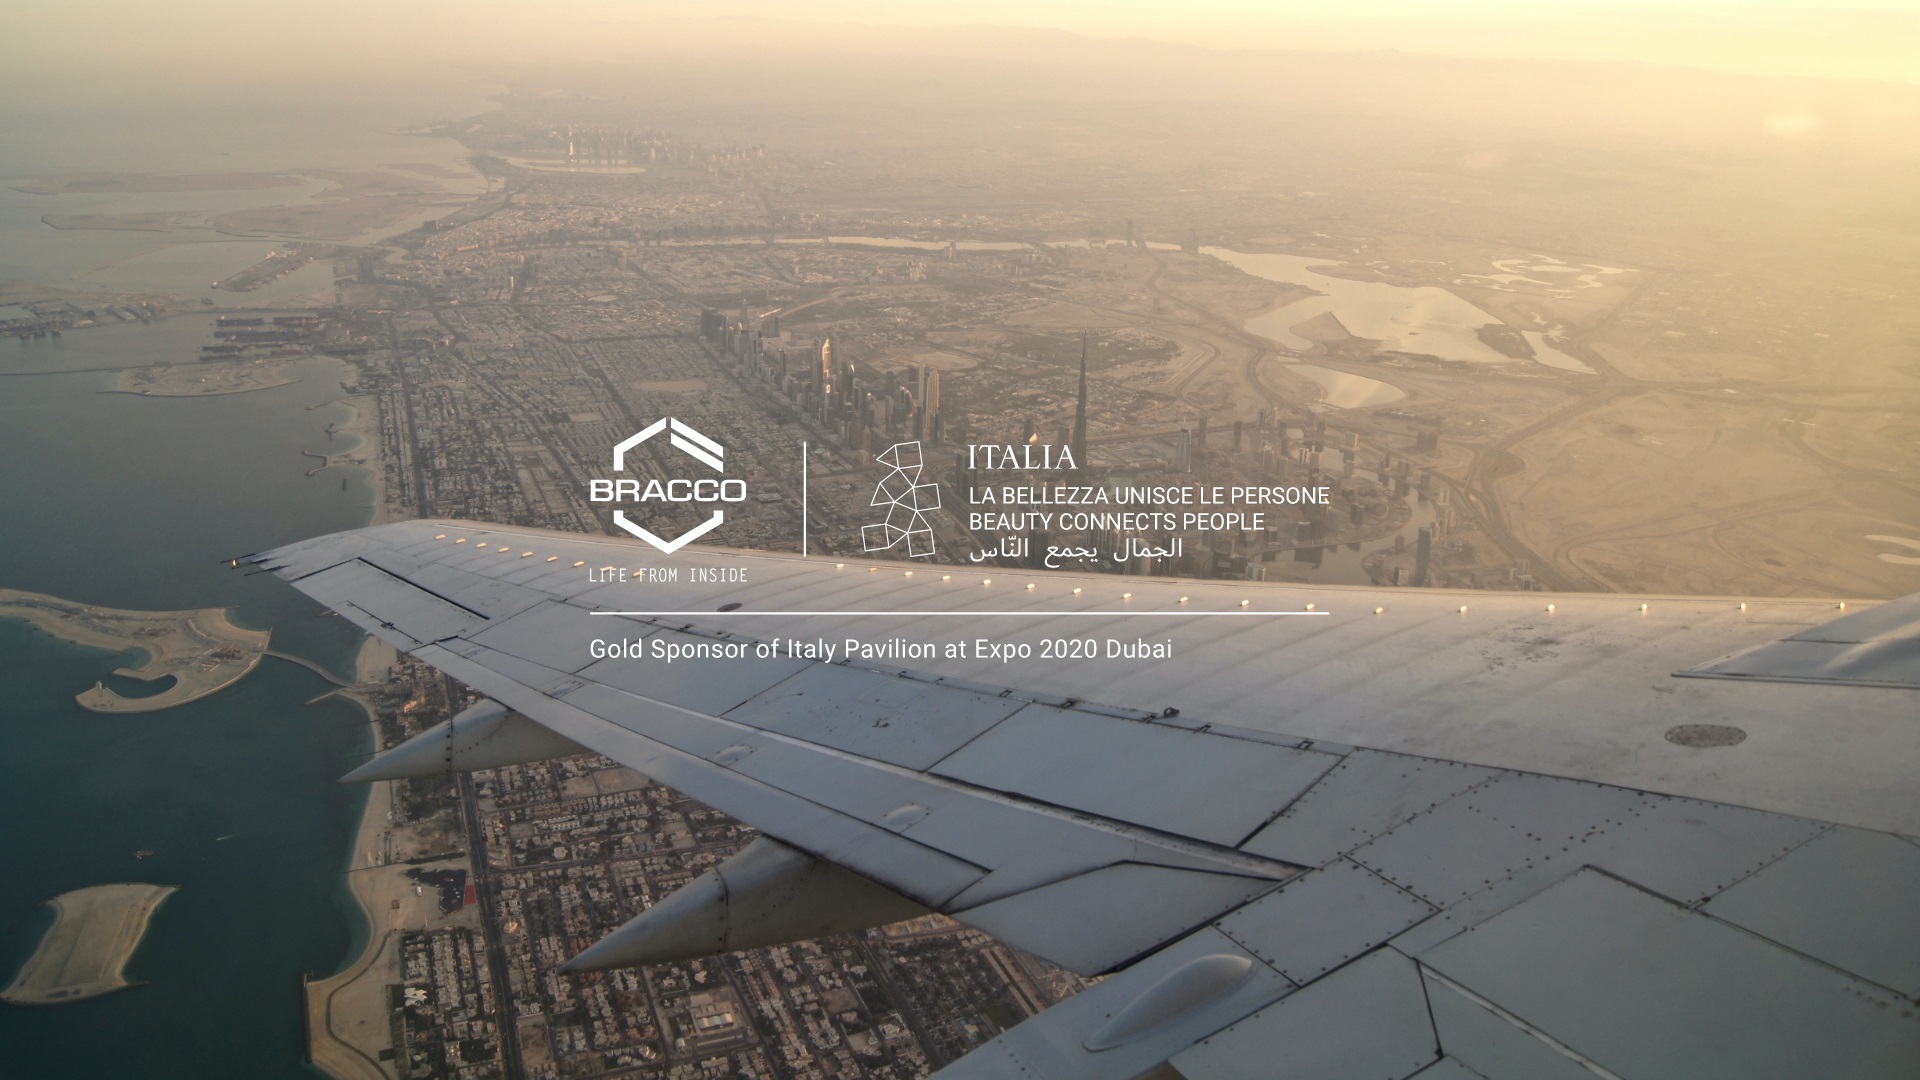 Expo 2020 Dubai: Avion as partner of the Bracco Group